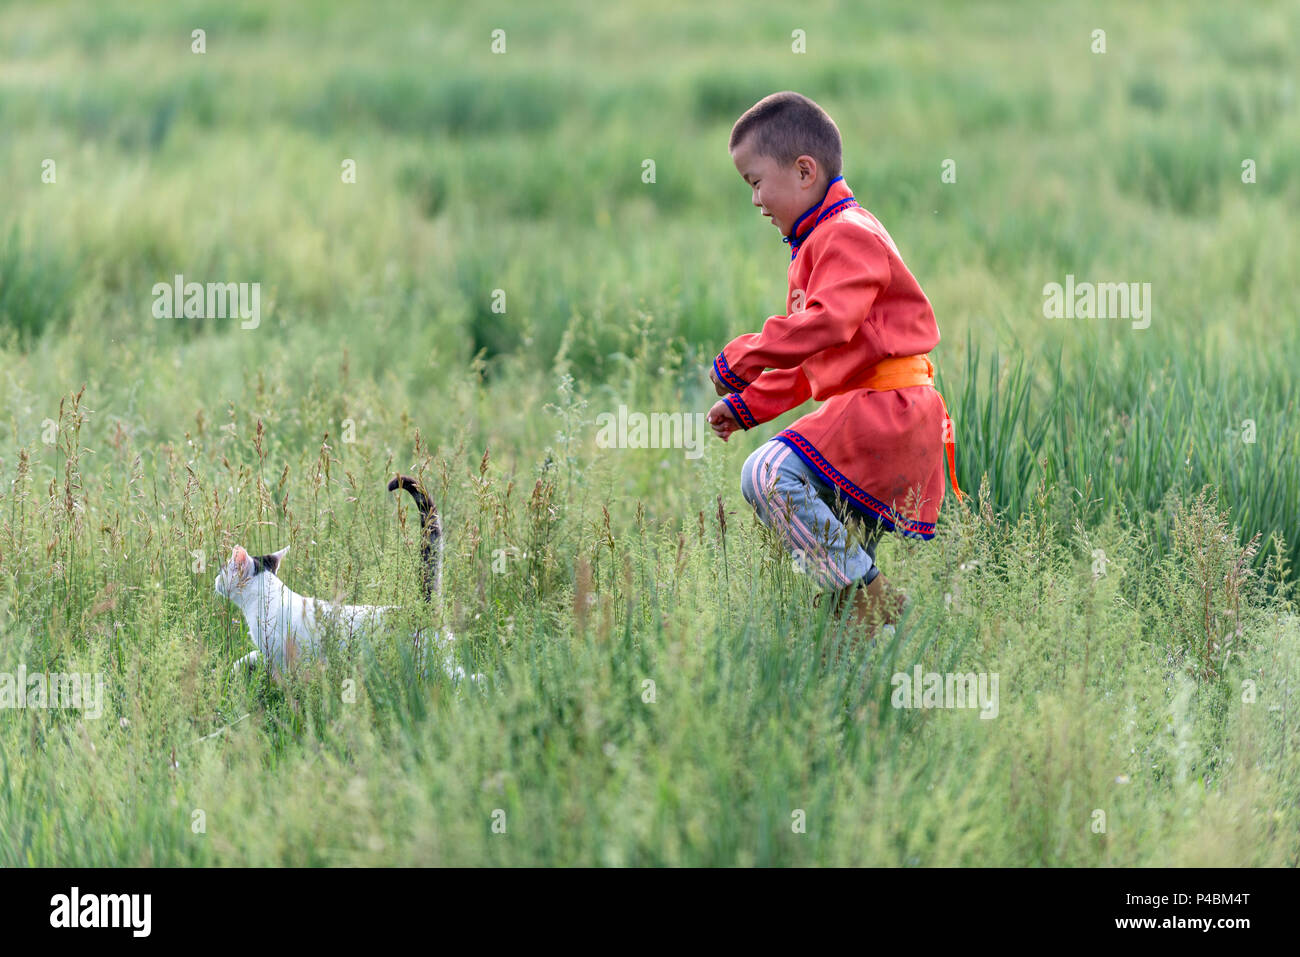 A Mongolian child his cat through tall grass, Zhenglanqi Wuyi, Inner Mongolia, China Stock Photo